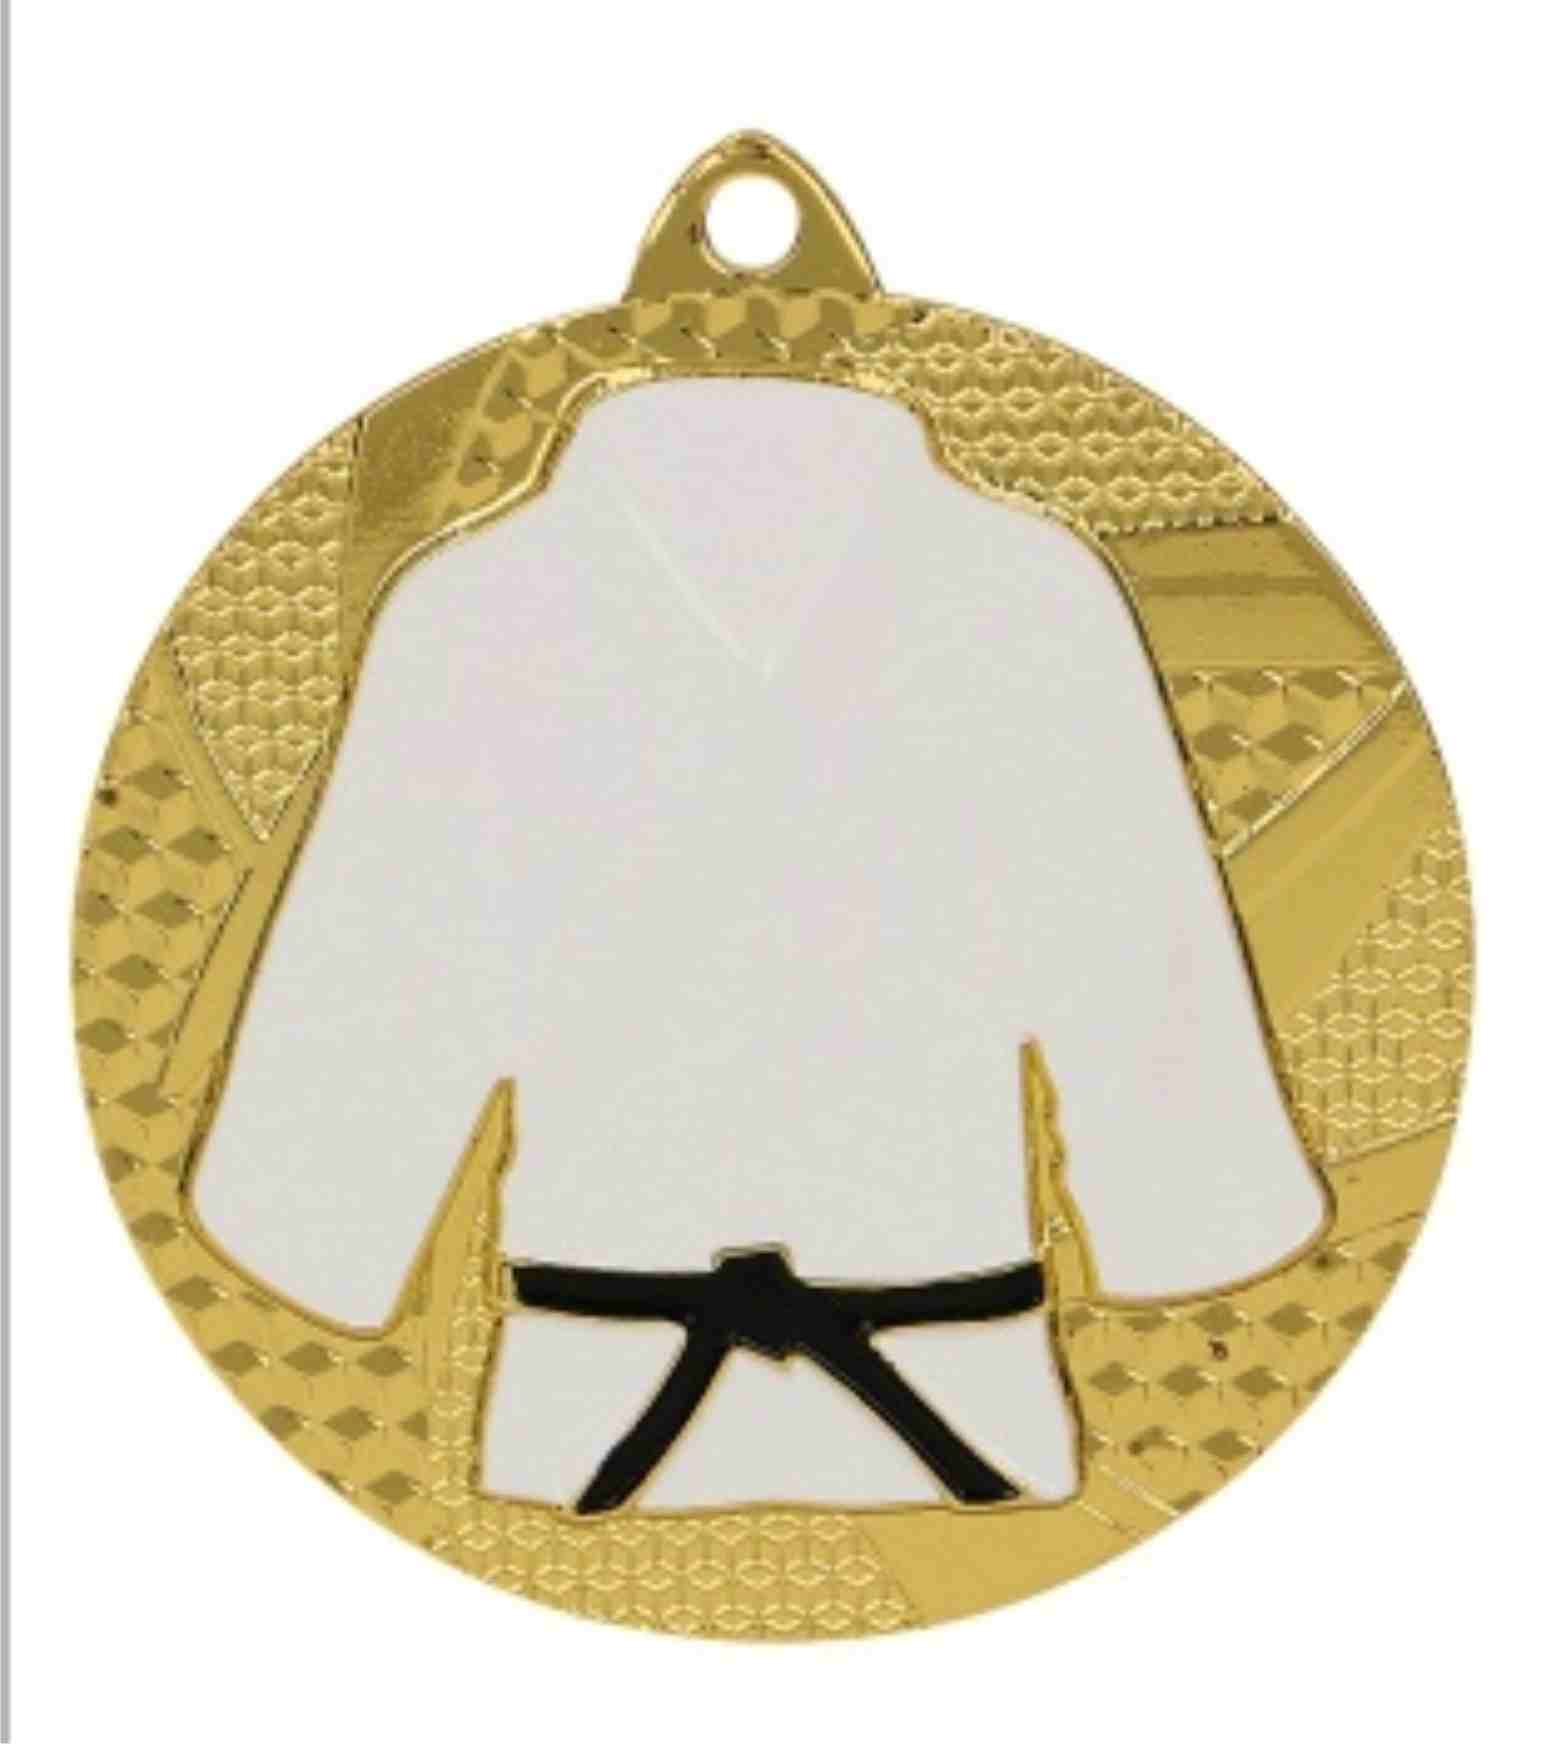 Sada medailí 50mm - karate , judo č.396